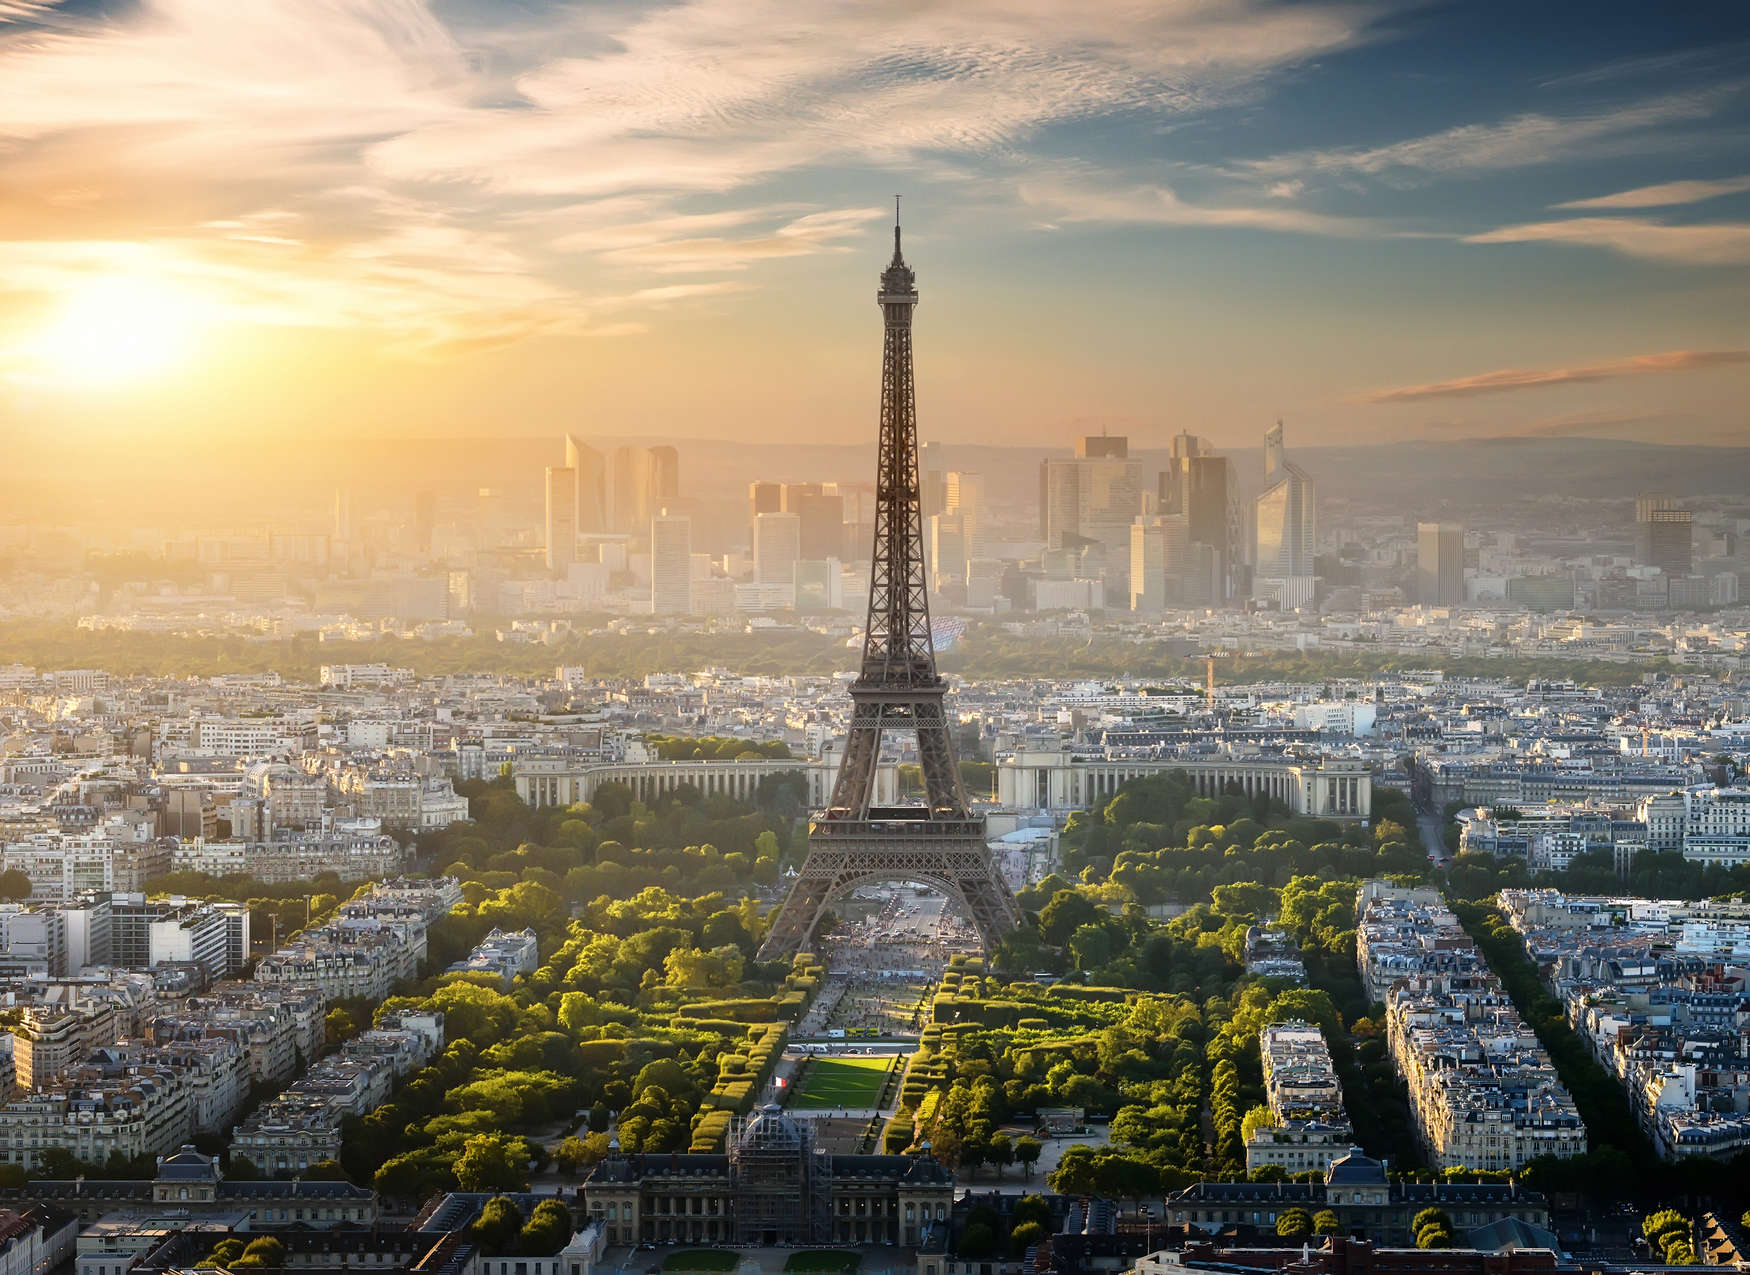             Papier peint panoramique Eifel Tour Paris - vert, gris, jaune
        